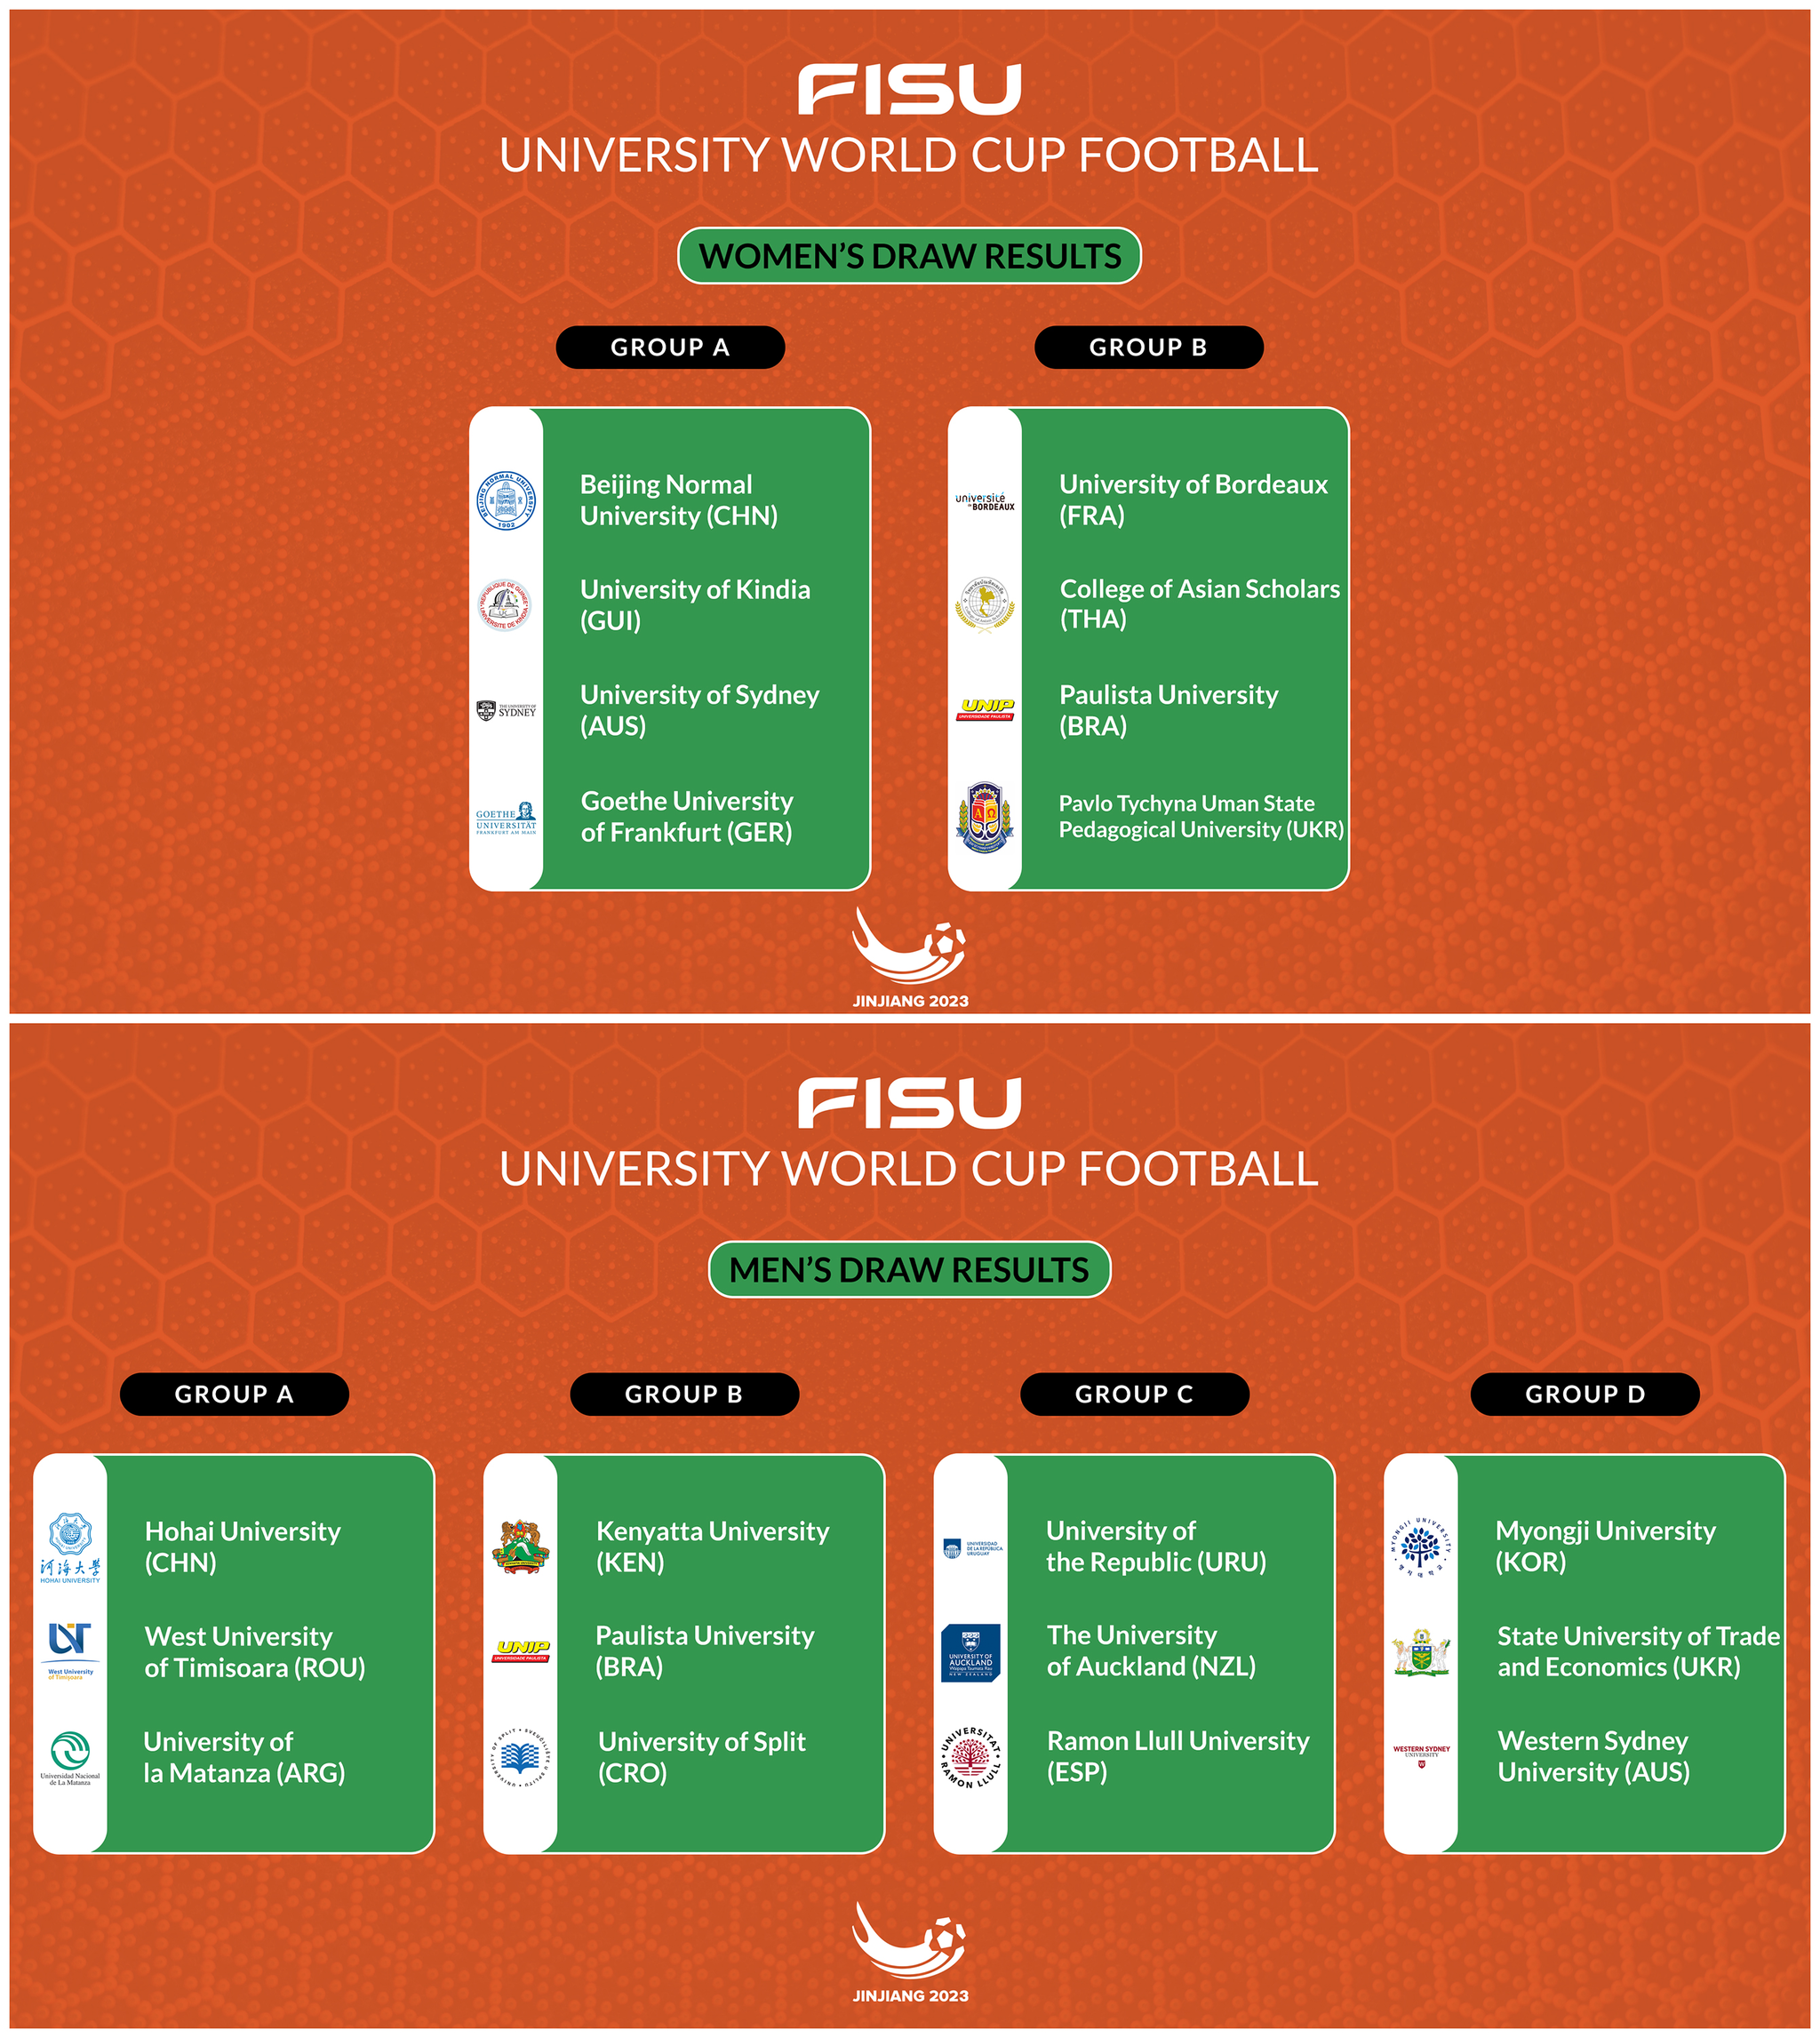 FISU University World Cups - FISU